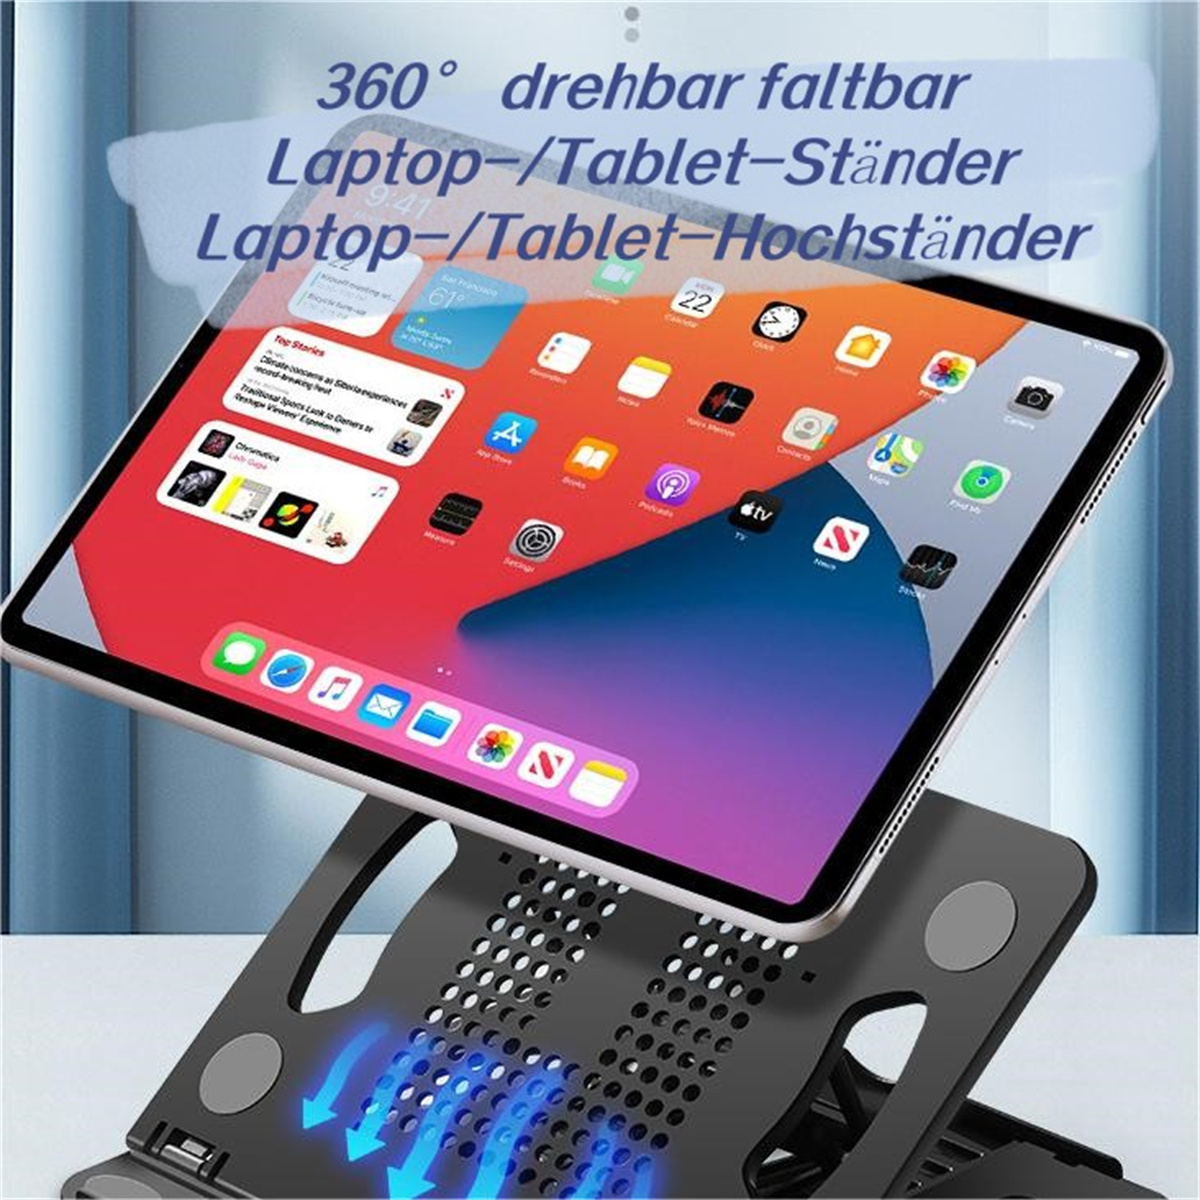 SHAOKE Computer klappbar Desktop bequem Laptop stehen Kühlung Lift Büro Höhe Ständer tragbare Tablet erhöhen Tablette